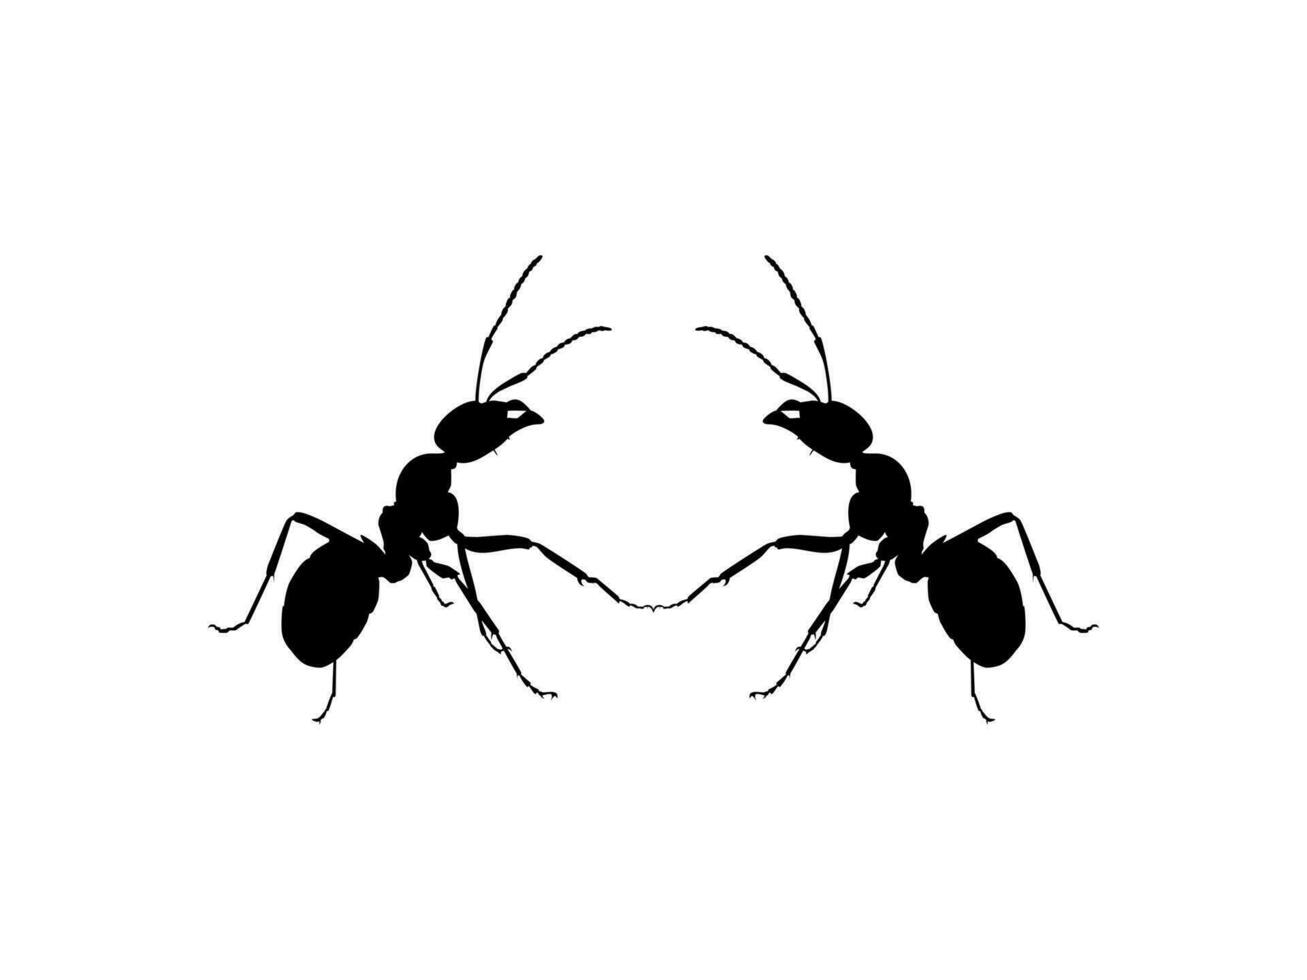 Pair of the Ant Silhouette for Art Illustration, Logo, Pictogram, Website, or Graphic Design Element. Vector Illustration